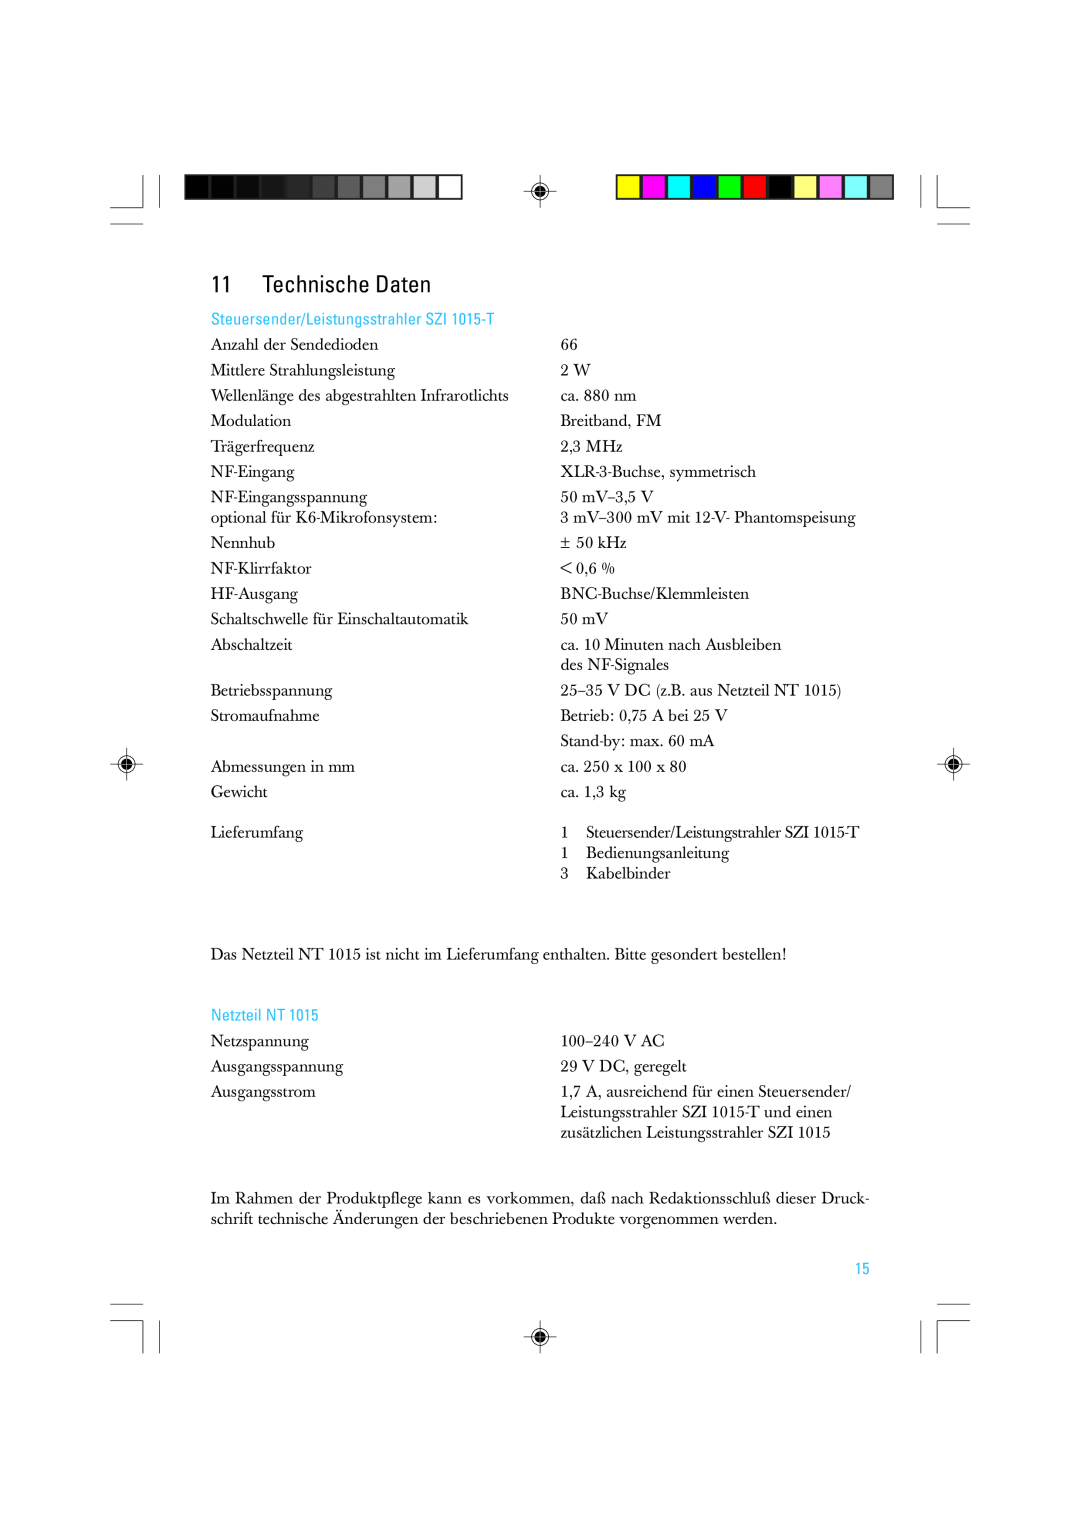 Sennheiser manual Technische Daten, Steuersender/Leistungsstrahler SZI 1015-T, Netzteil NT 